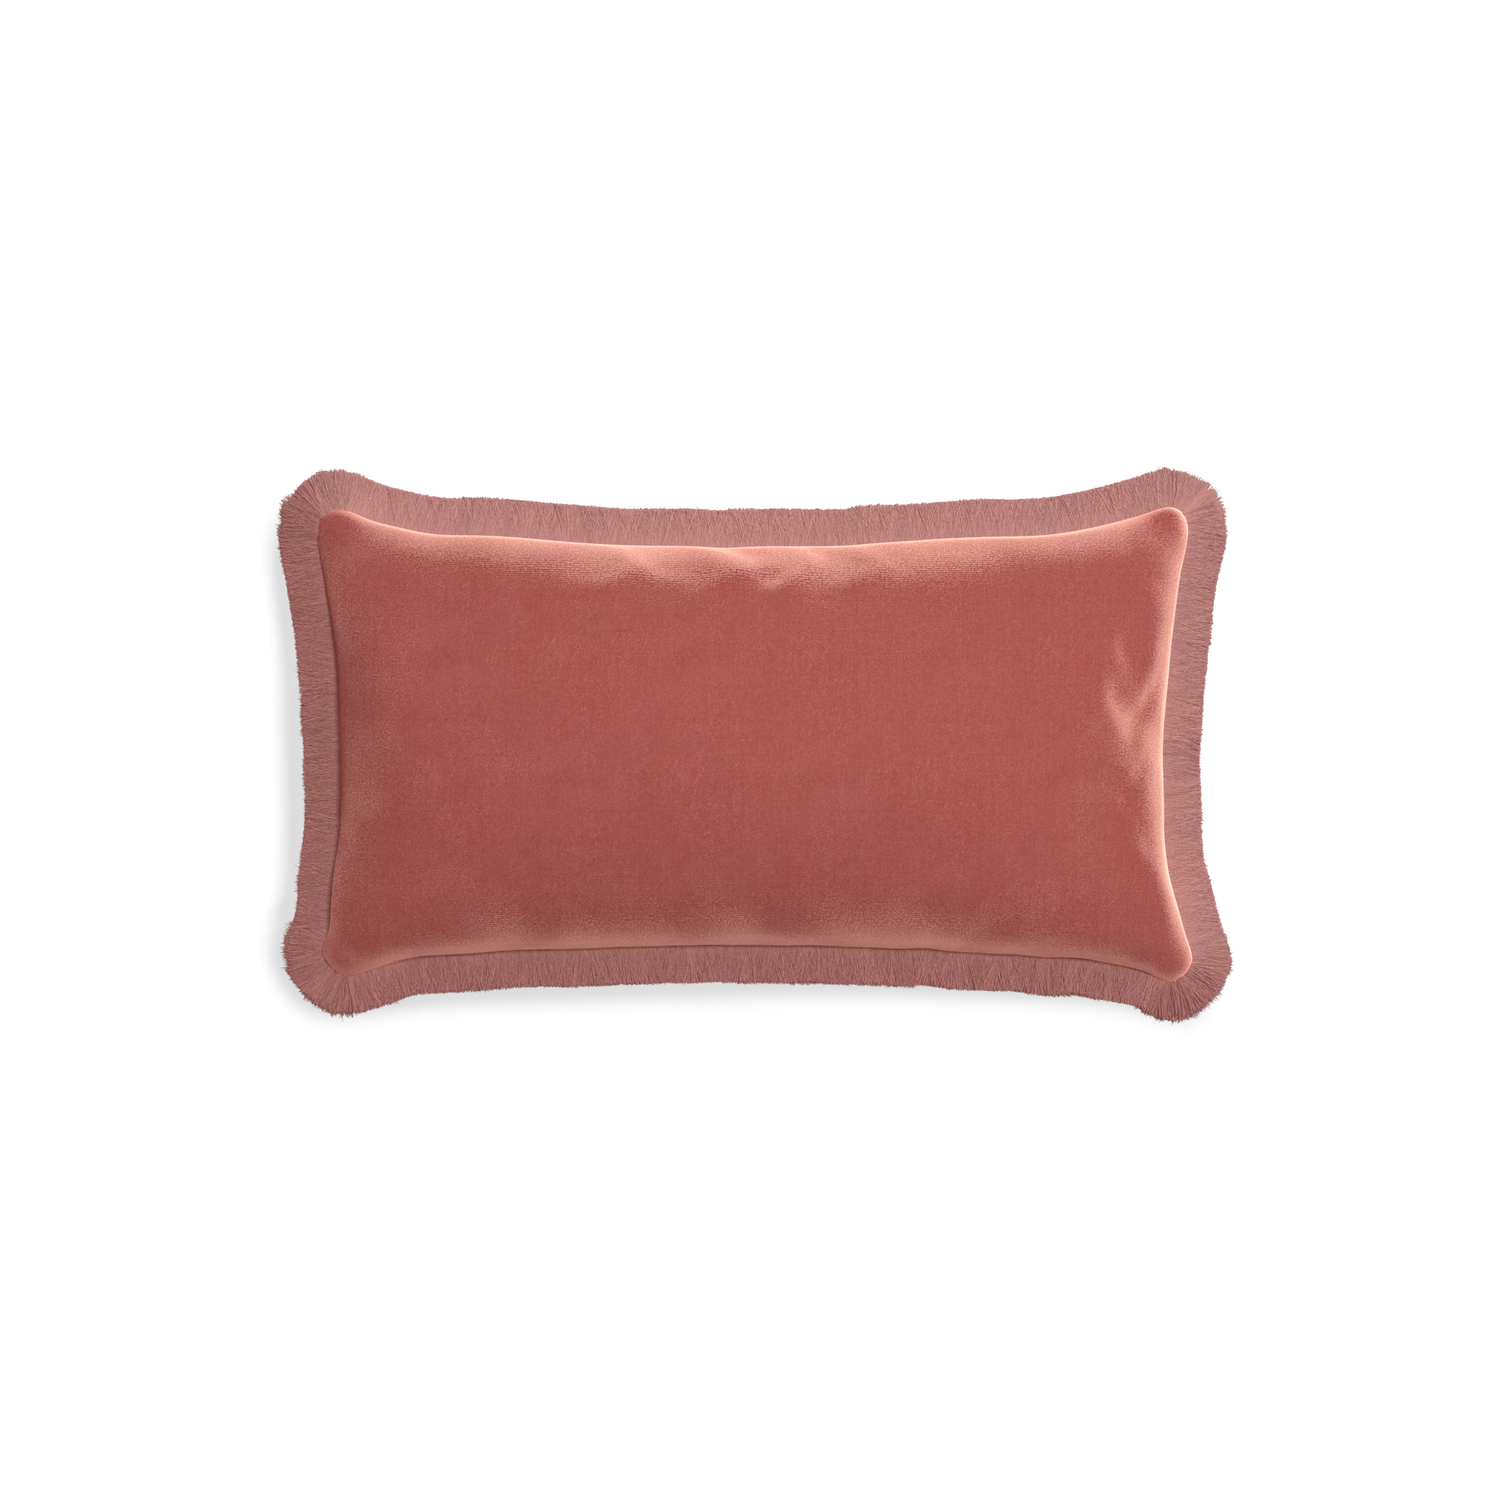 rectangle coral velvet pillow with dusty rose fringe